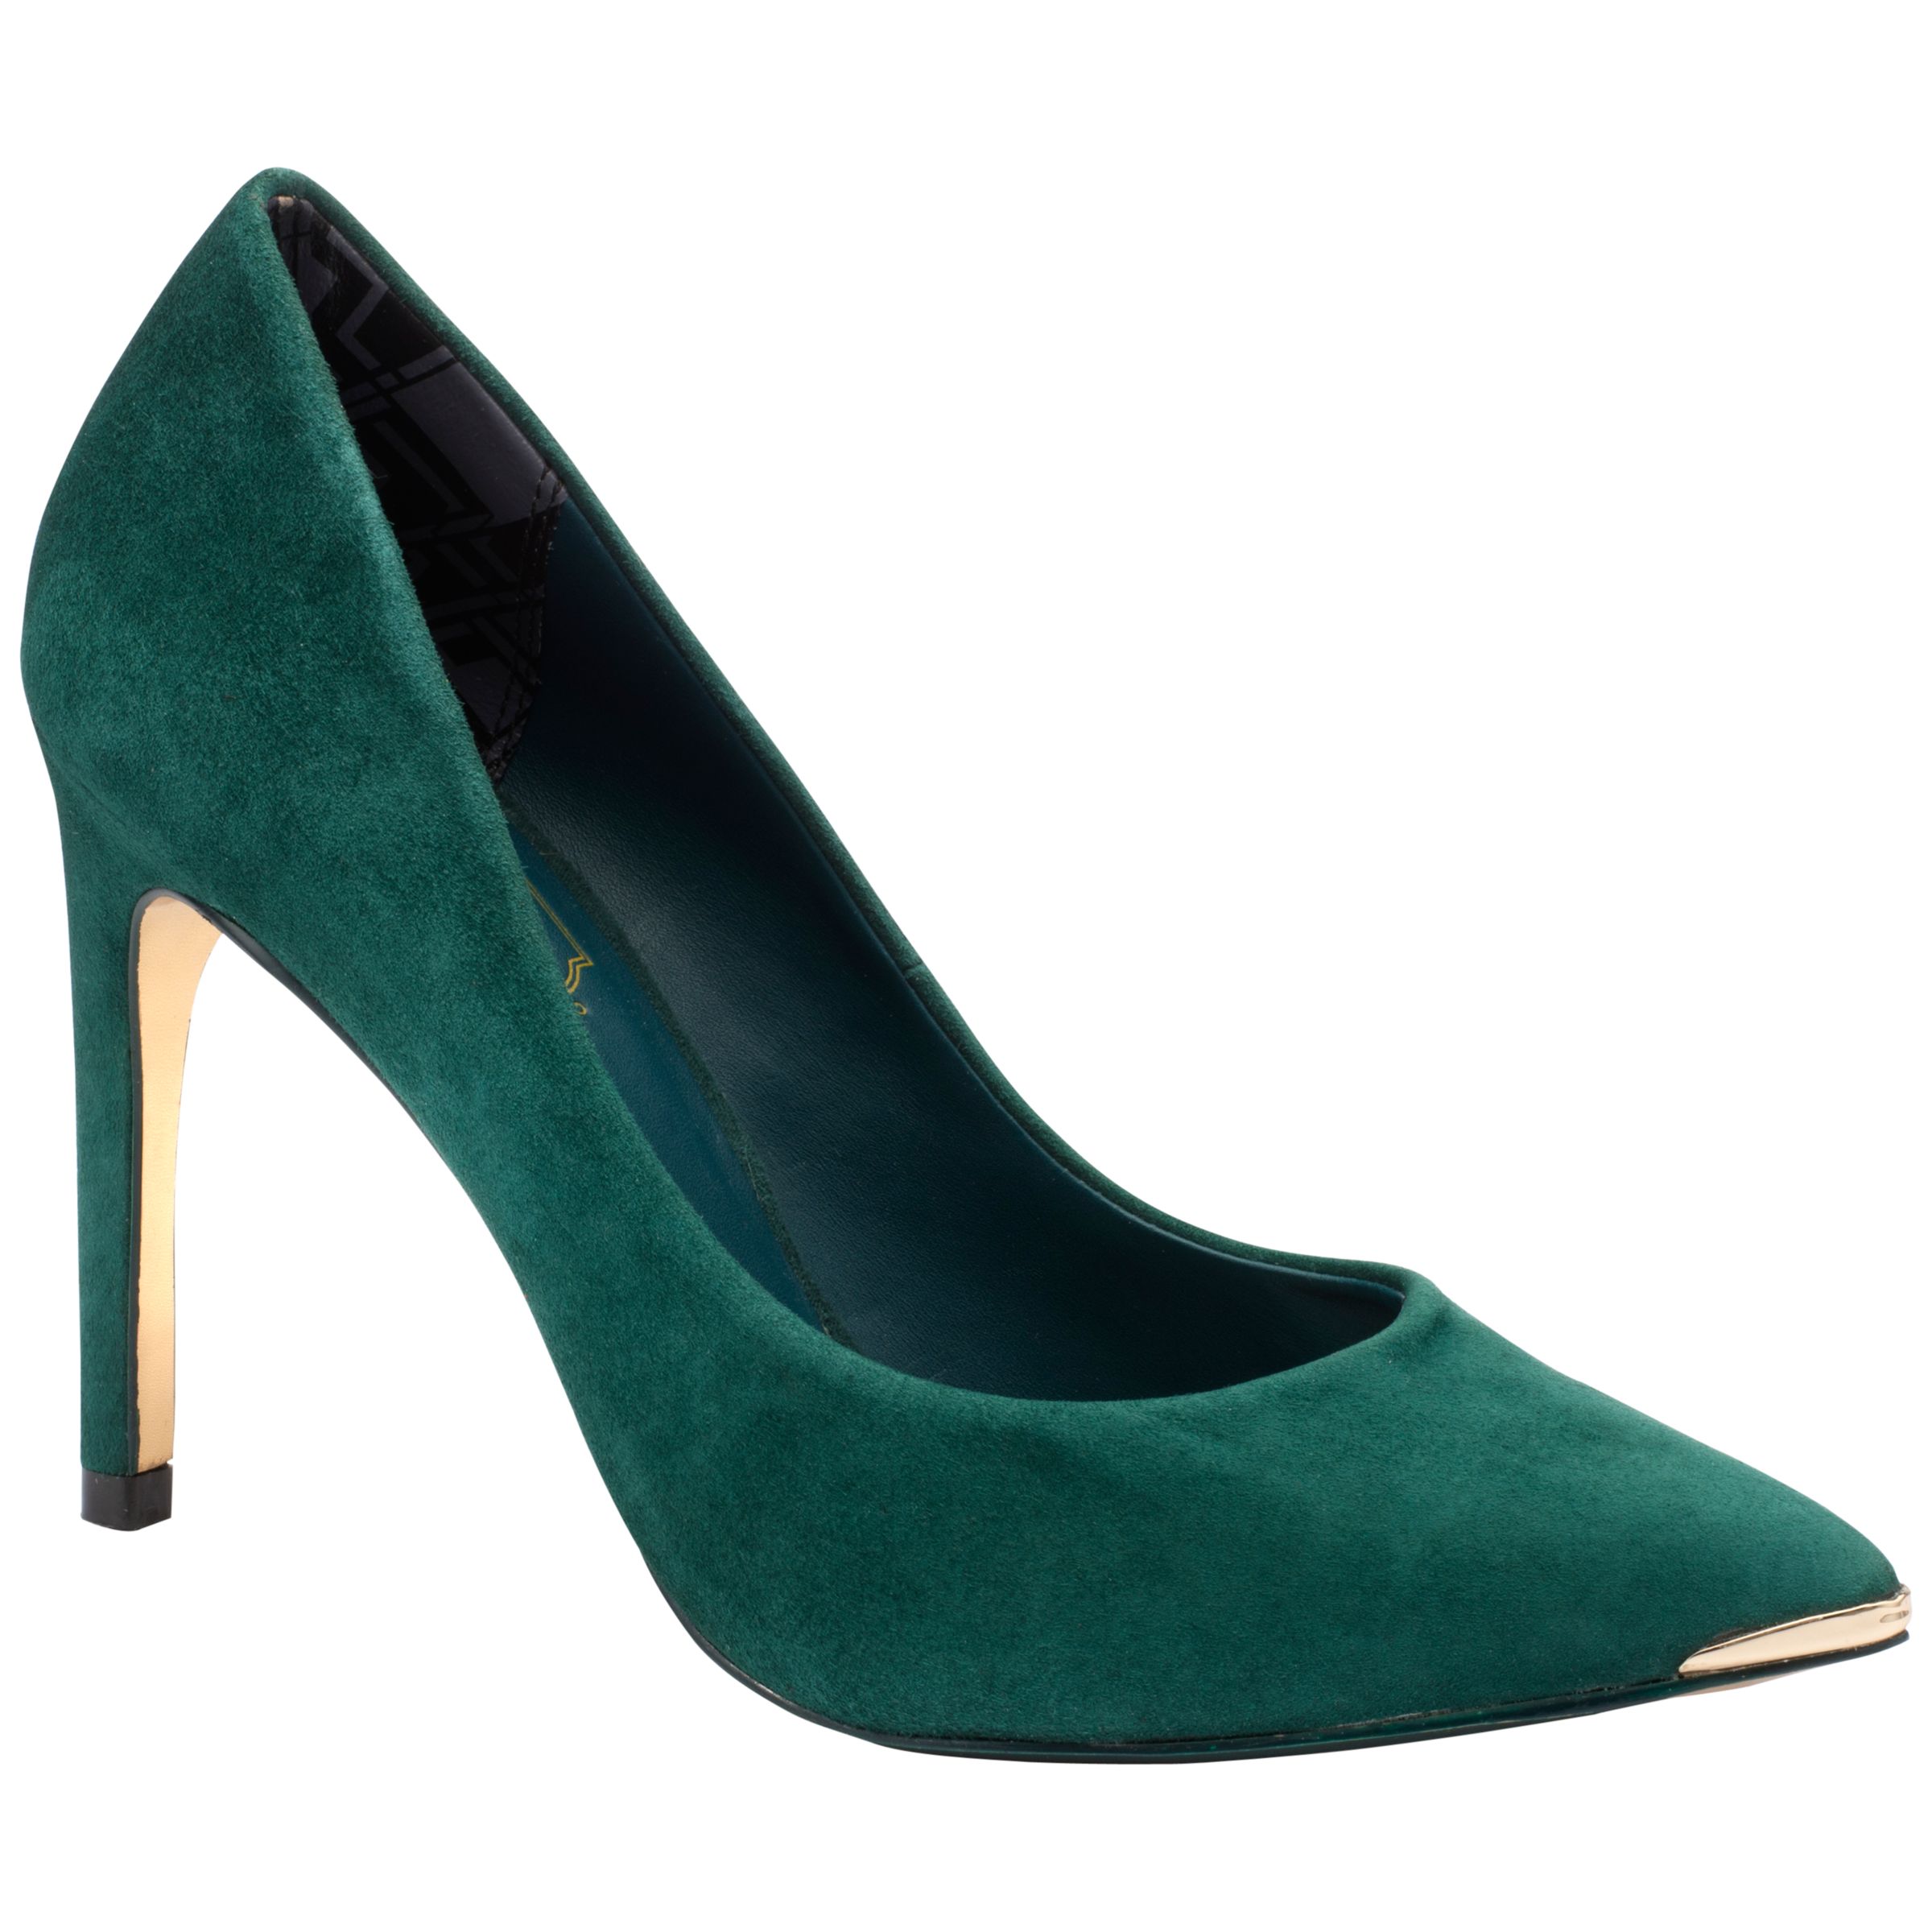 Seeinglooking: Dark Green Suede Court Shoes